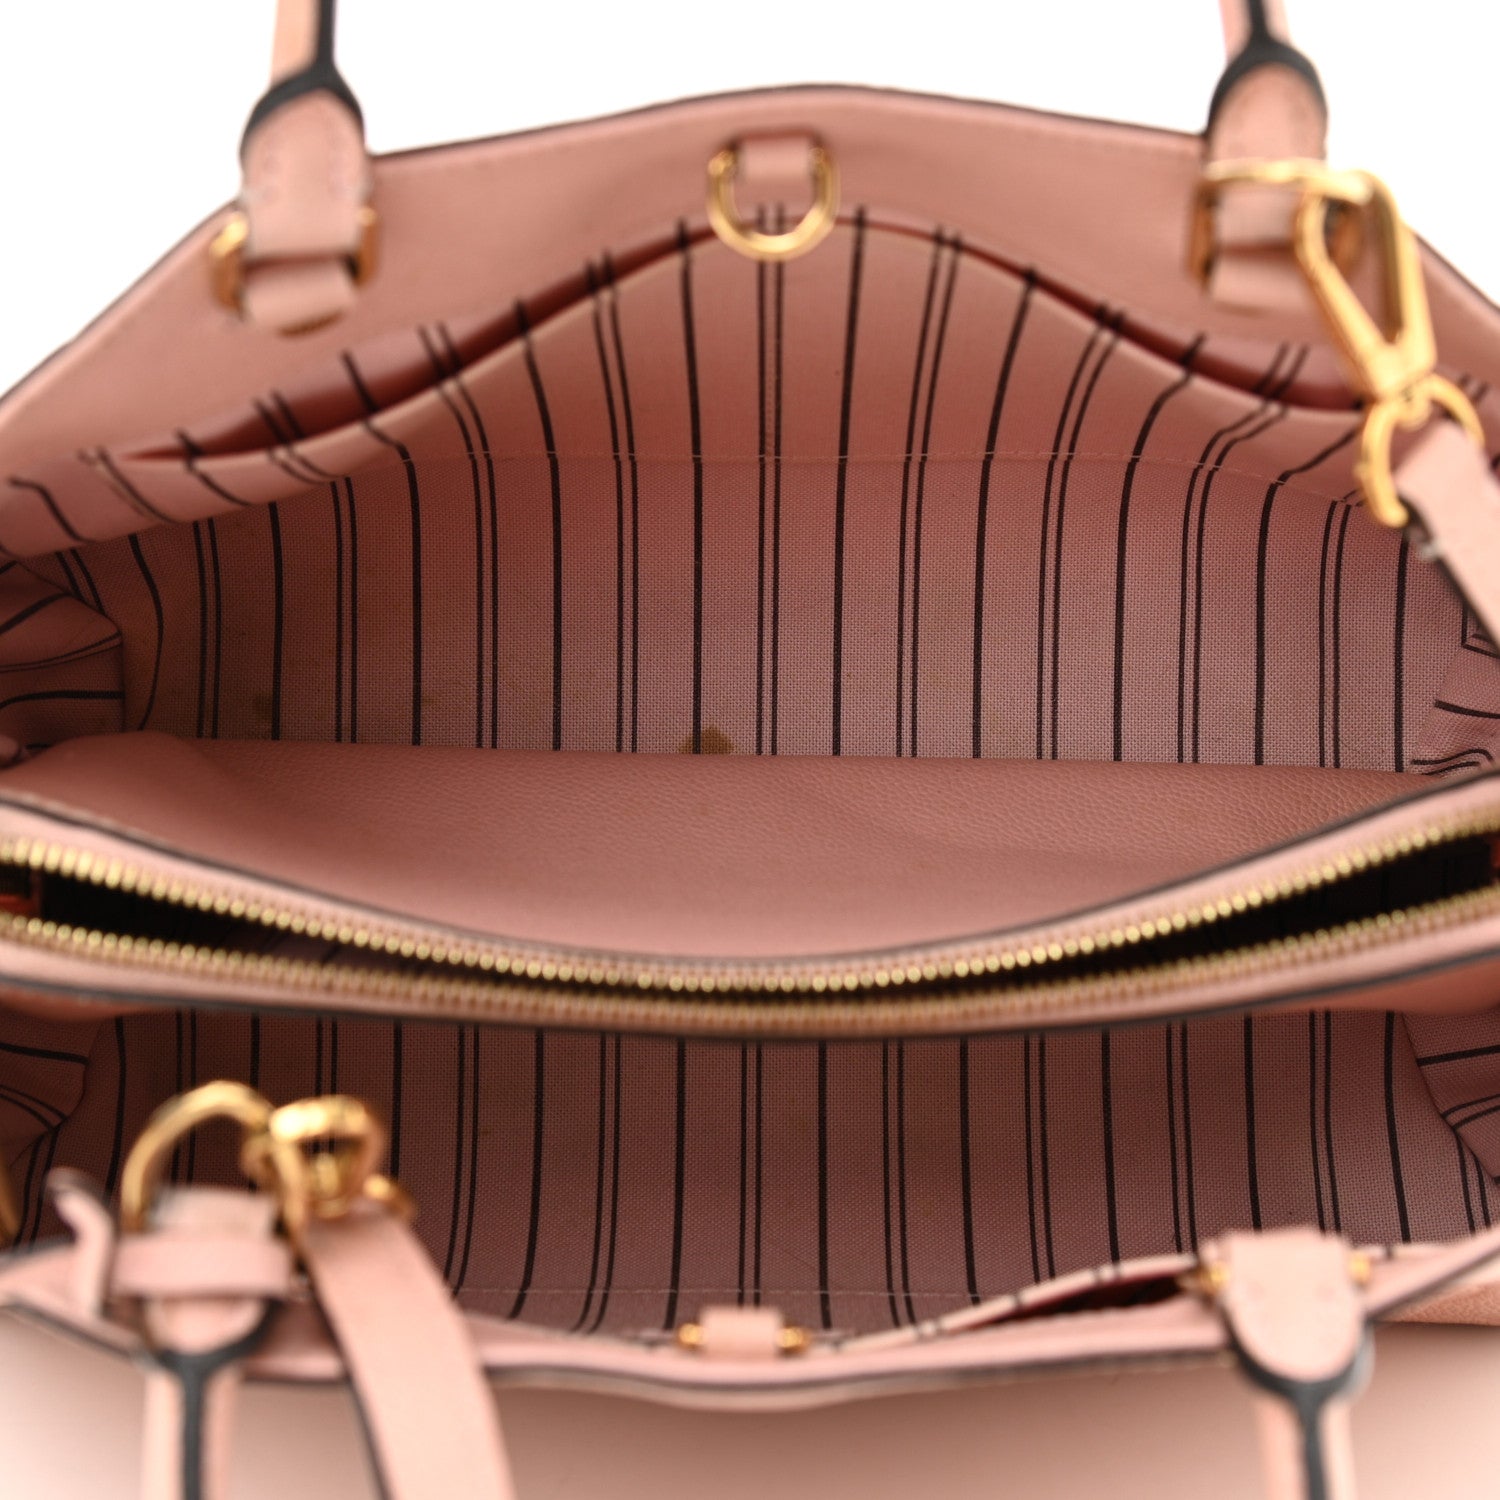 Louis Vuitton Da Vinci Montaigne mm Tote Bag(Pink)